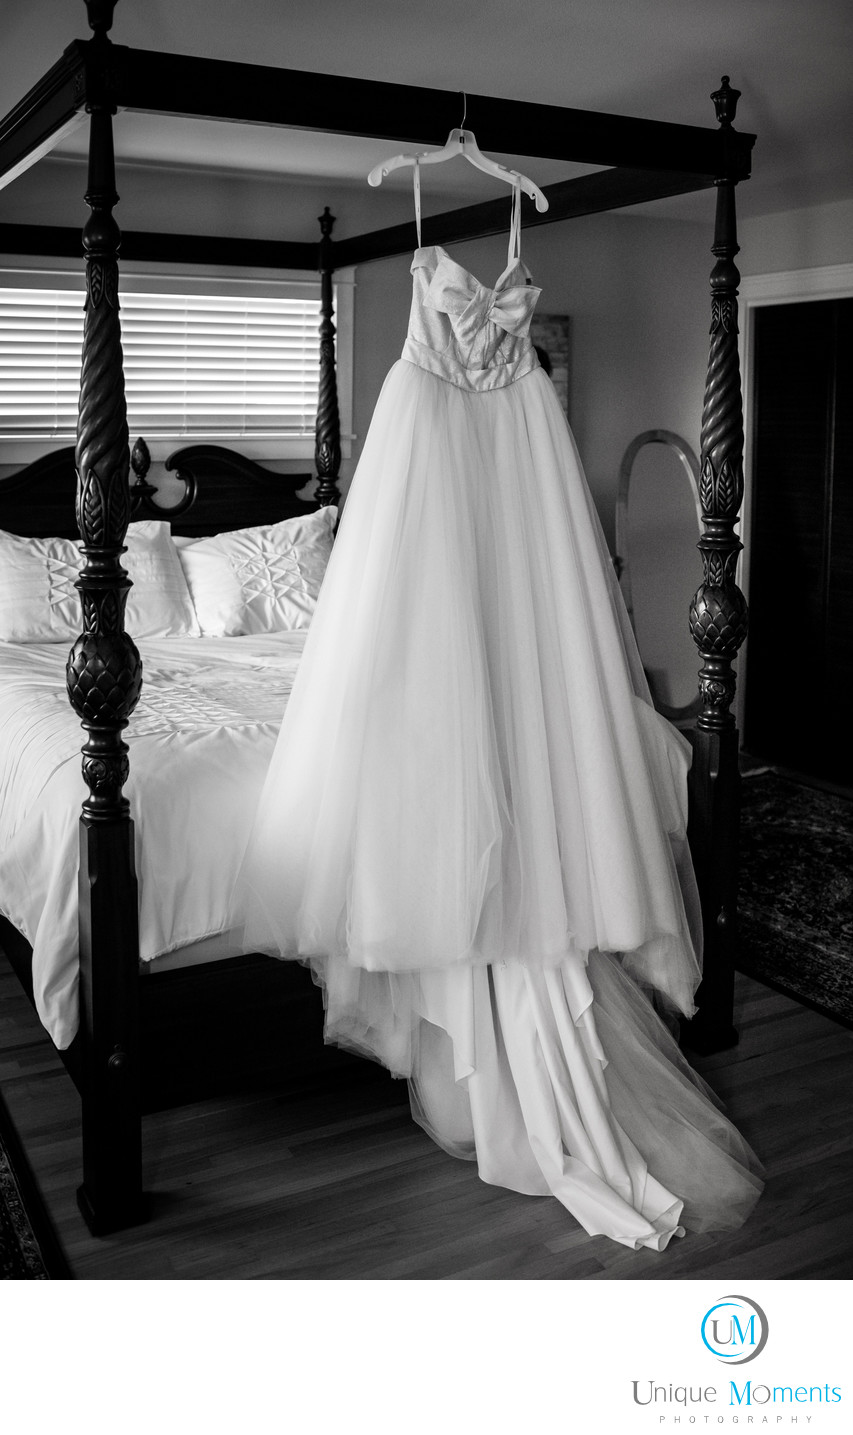 Best Bridal Dress Picture Gig Harbor Photographer